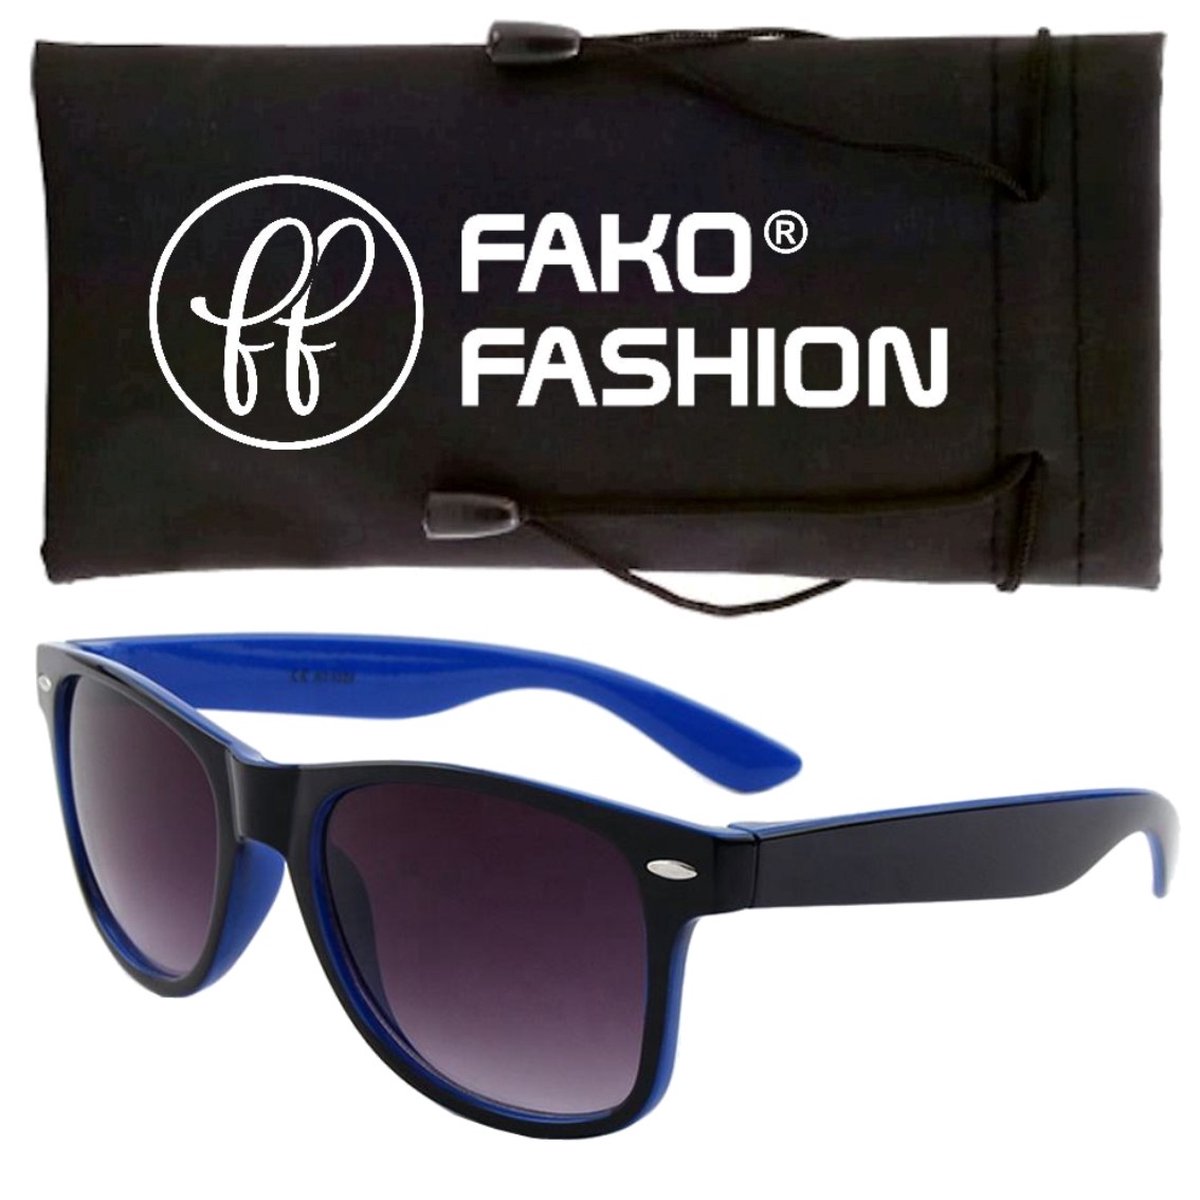 Fako Fashion® - Zonnebril - Duo Tone - Zwart/Blauw